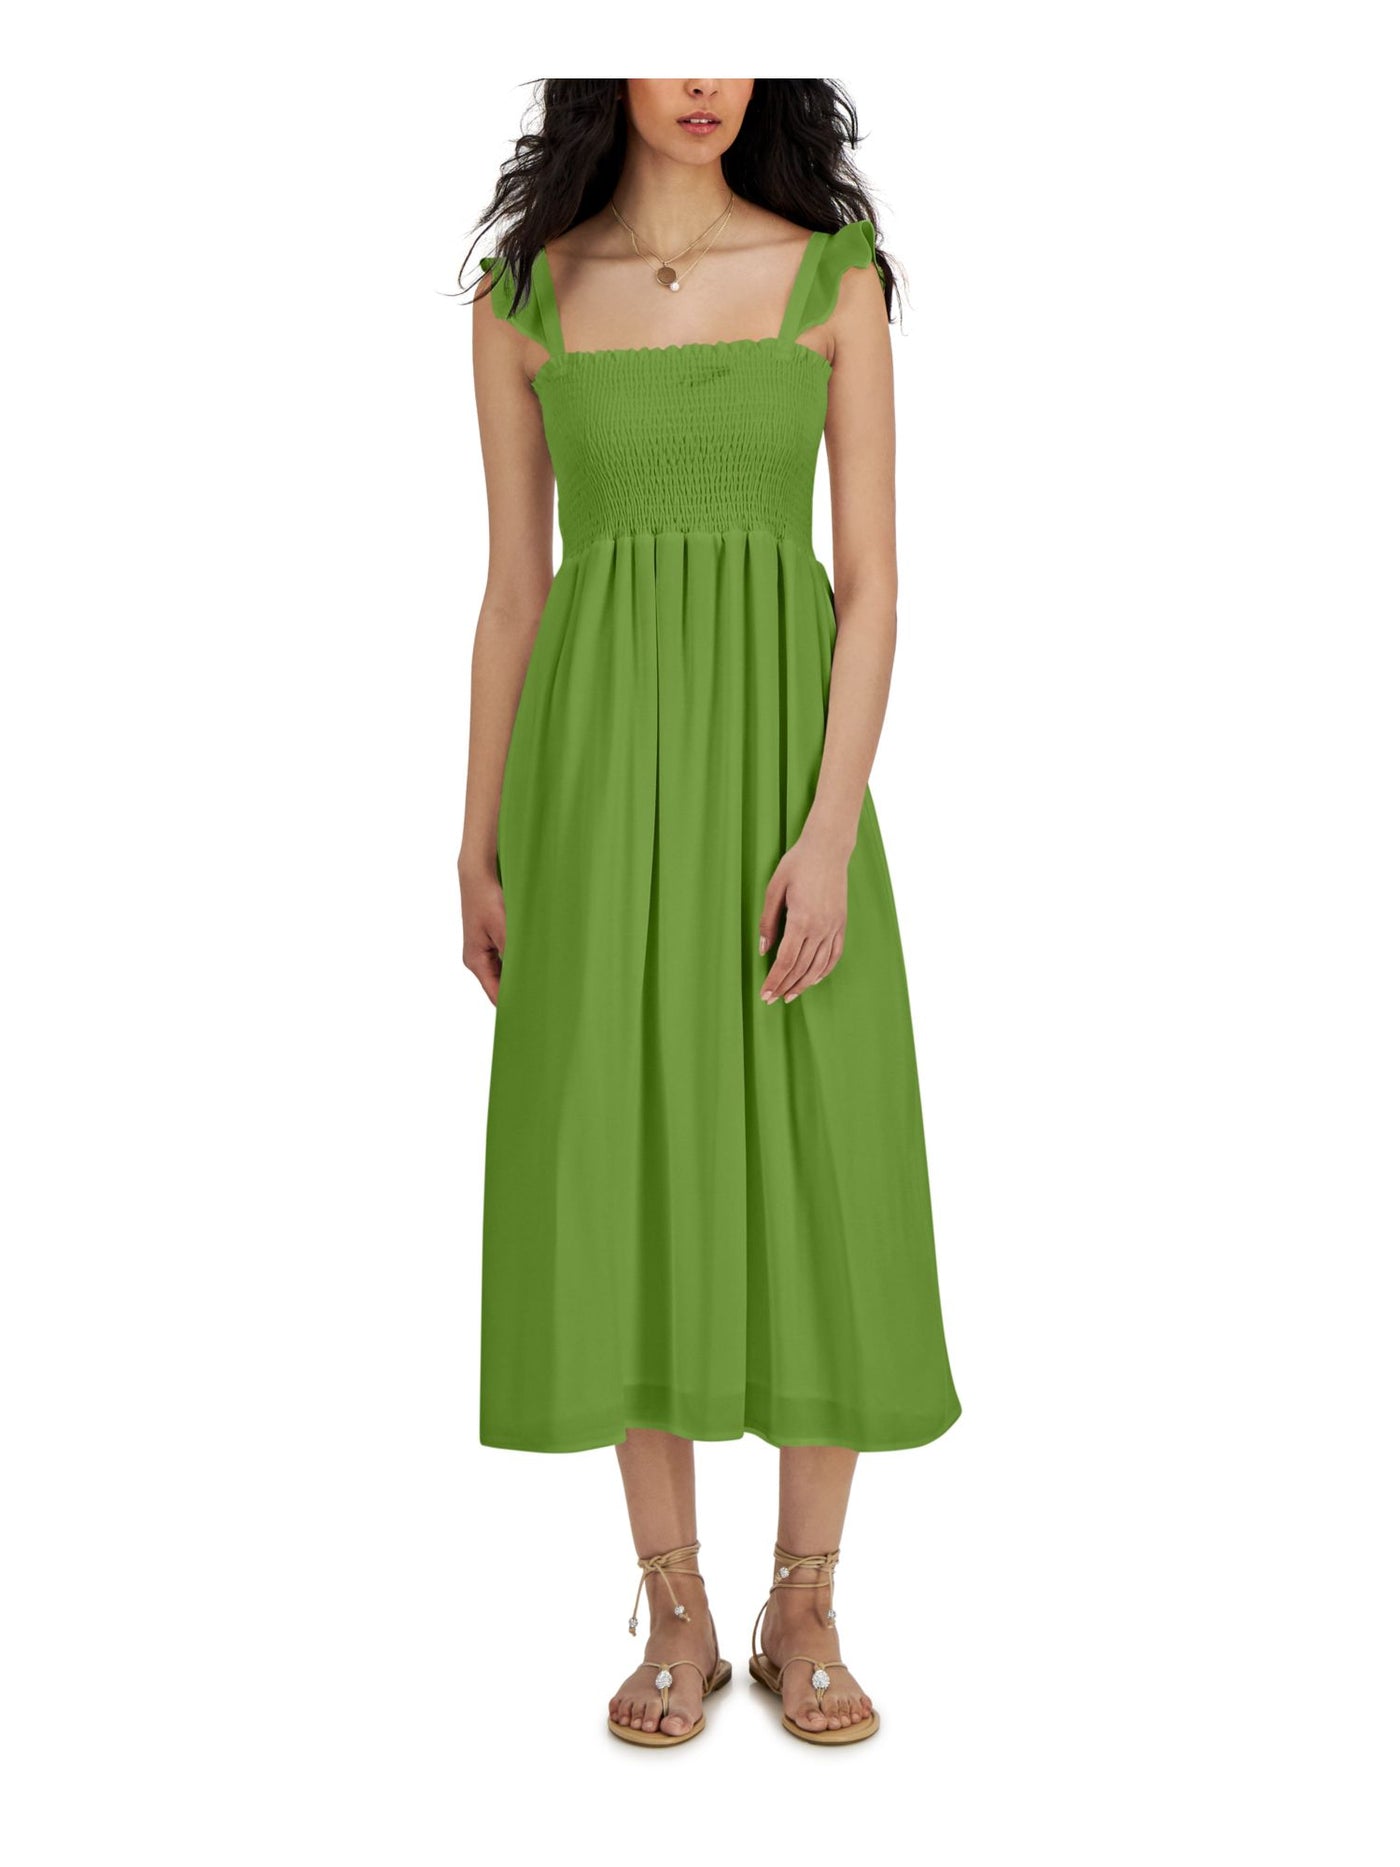 INC DRESSES Womens Green Smocked Ruffled Pullover Sleeveless Square Neck Midi Fit + Flare Dress 12